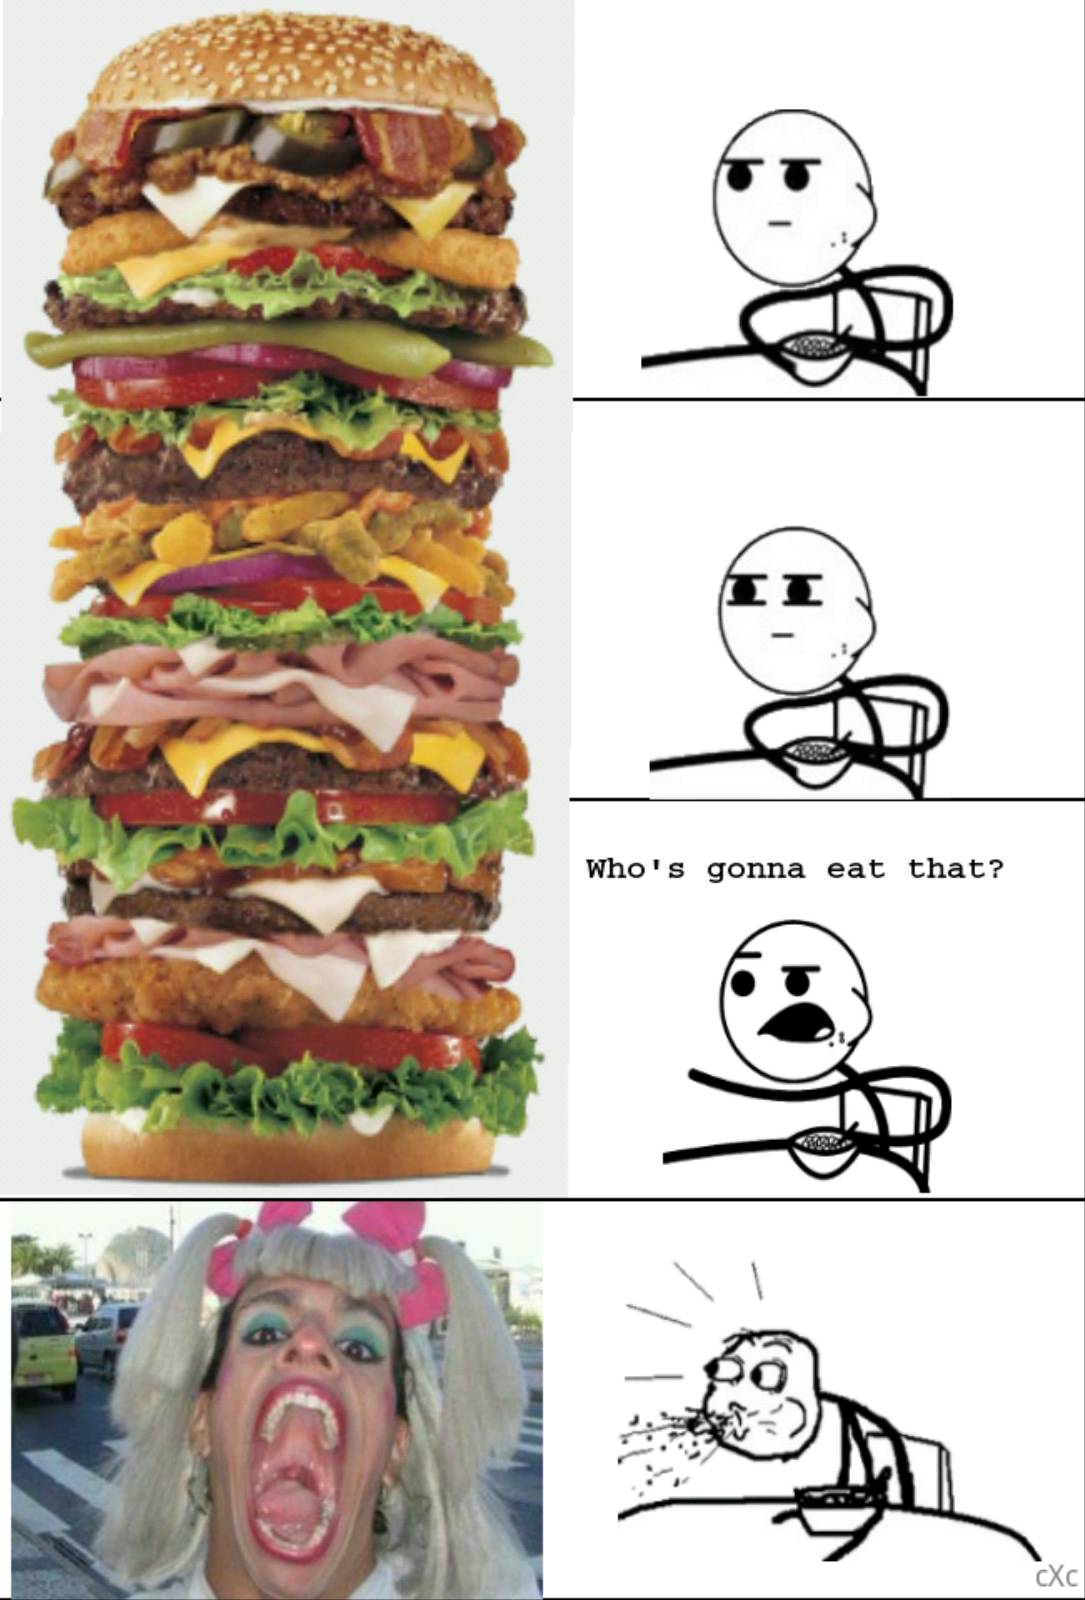 huge burger - meme